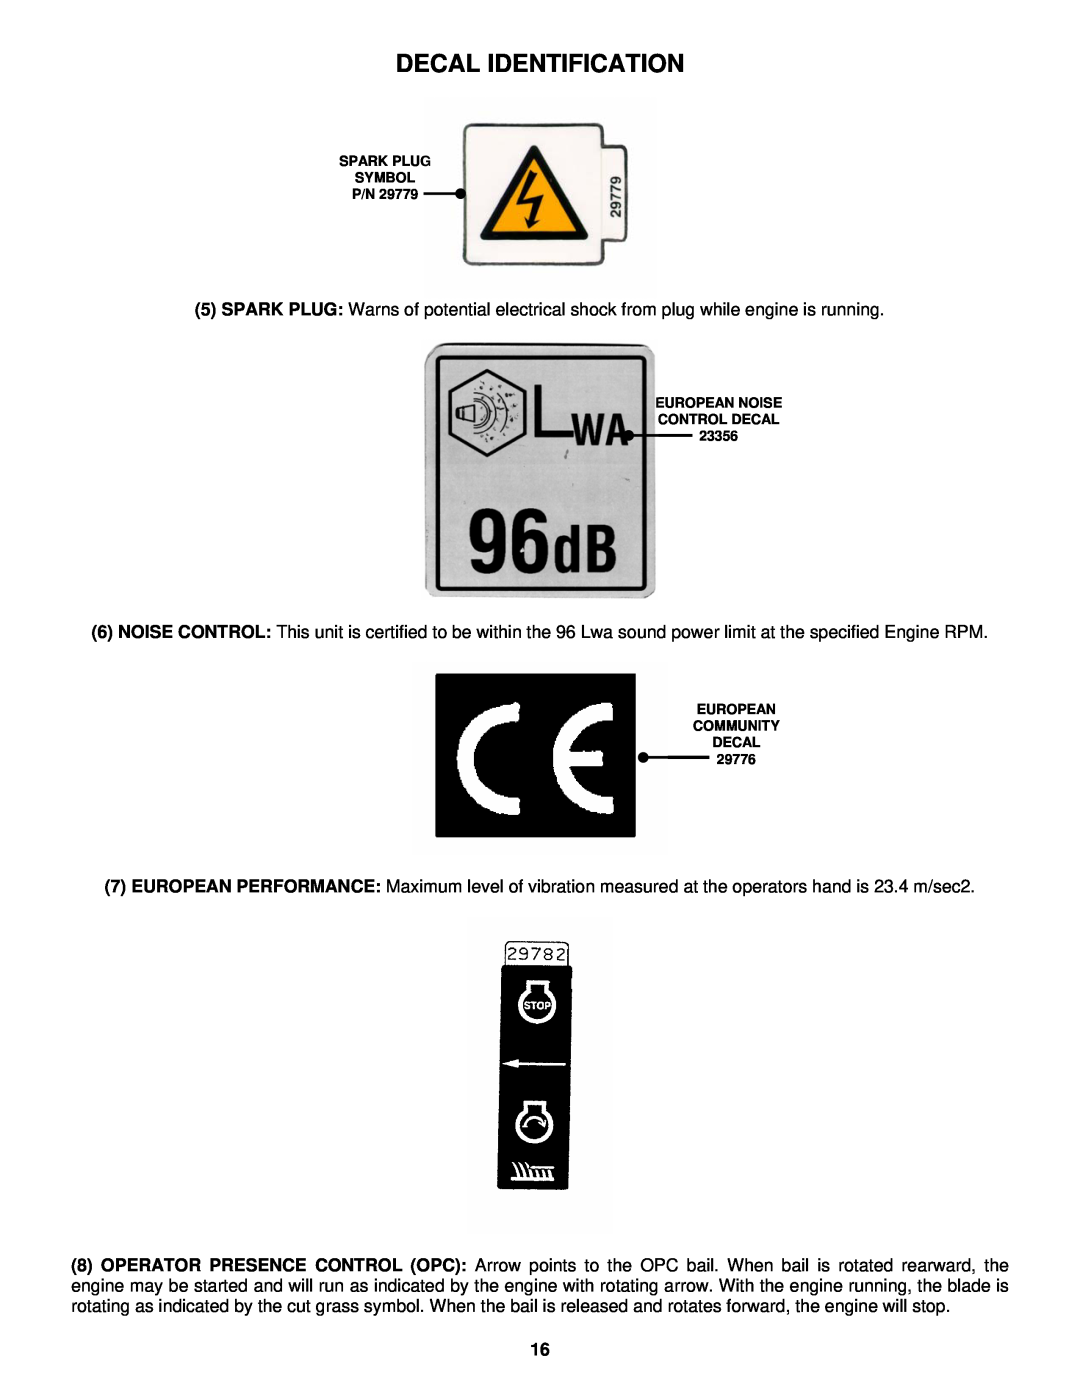 Snapper ER195517B Decal Identification, Spark Plug Symbol P/N, European Noise Control Decal, European Community Decal 